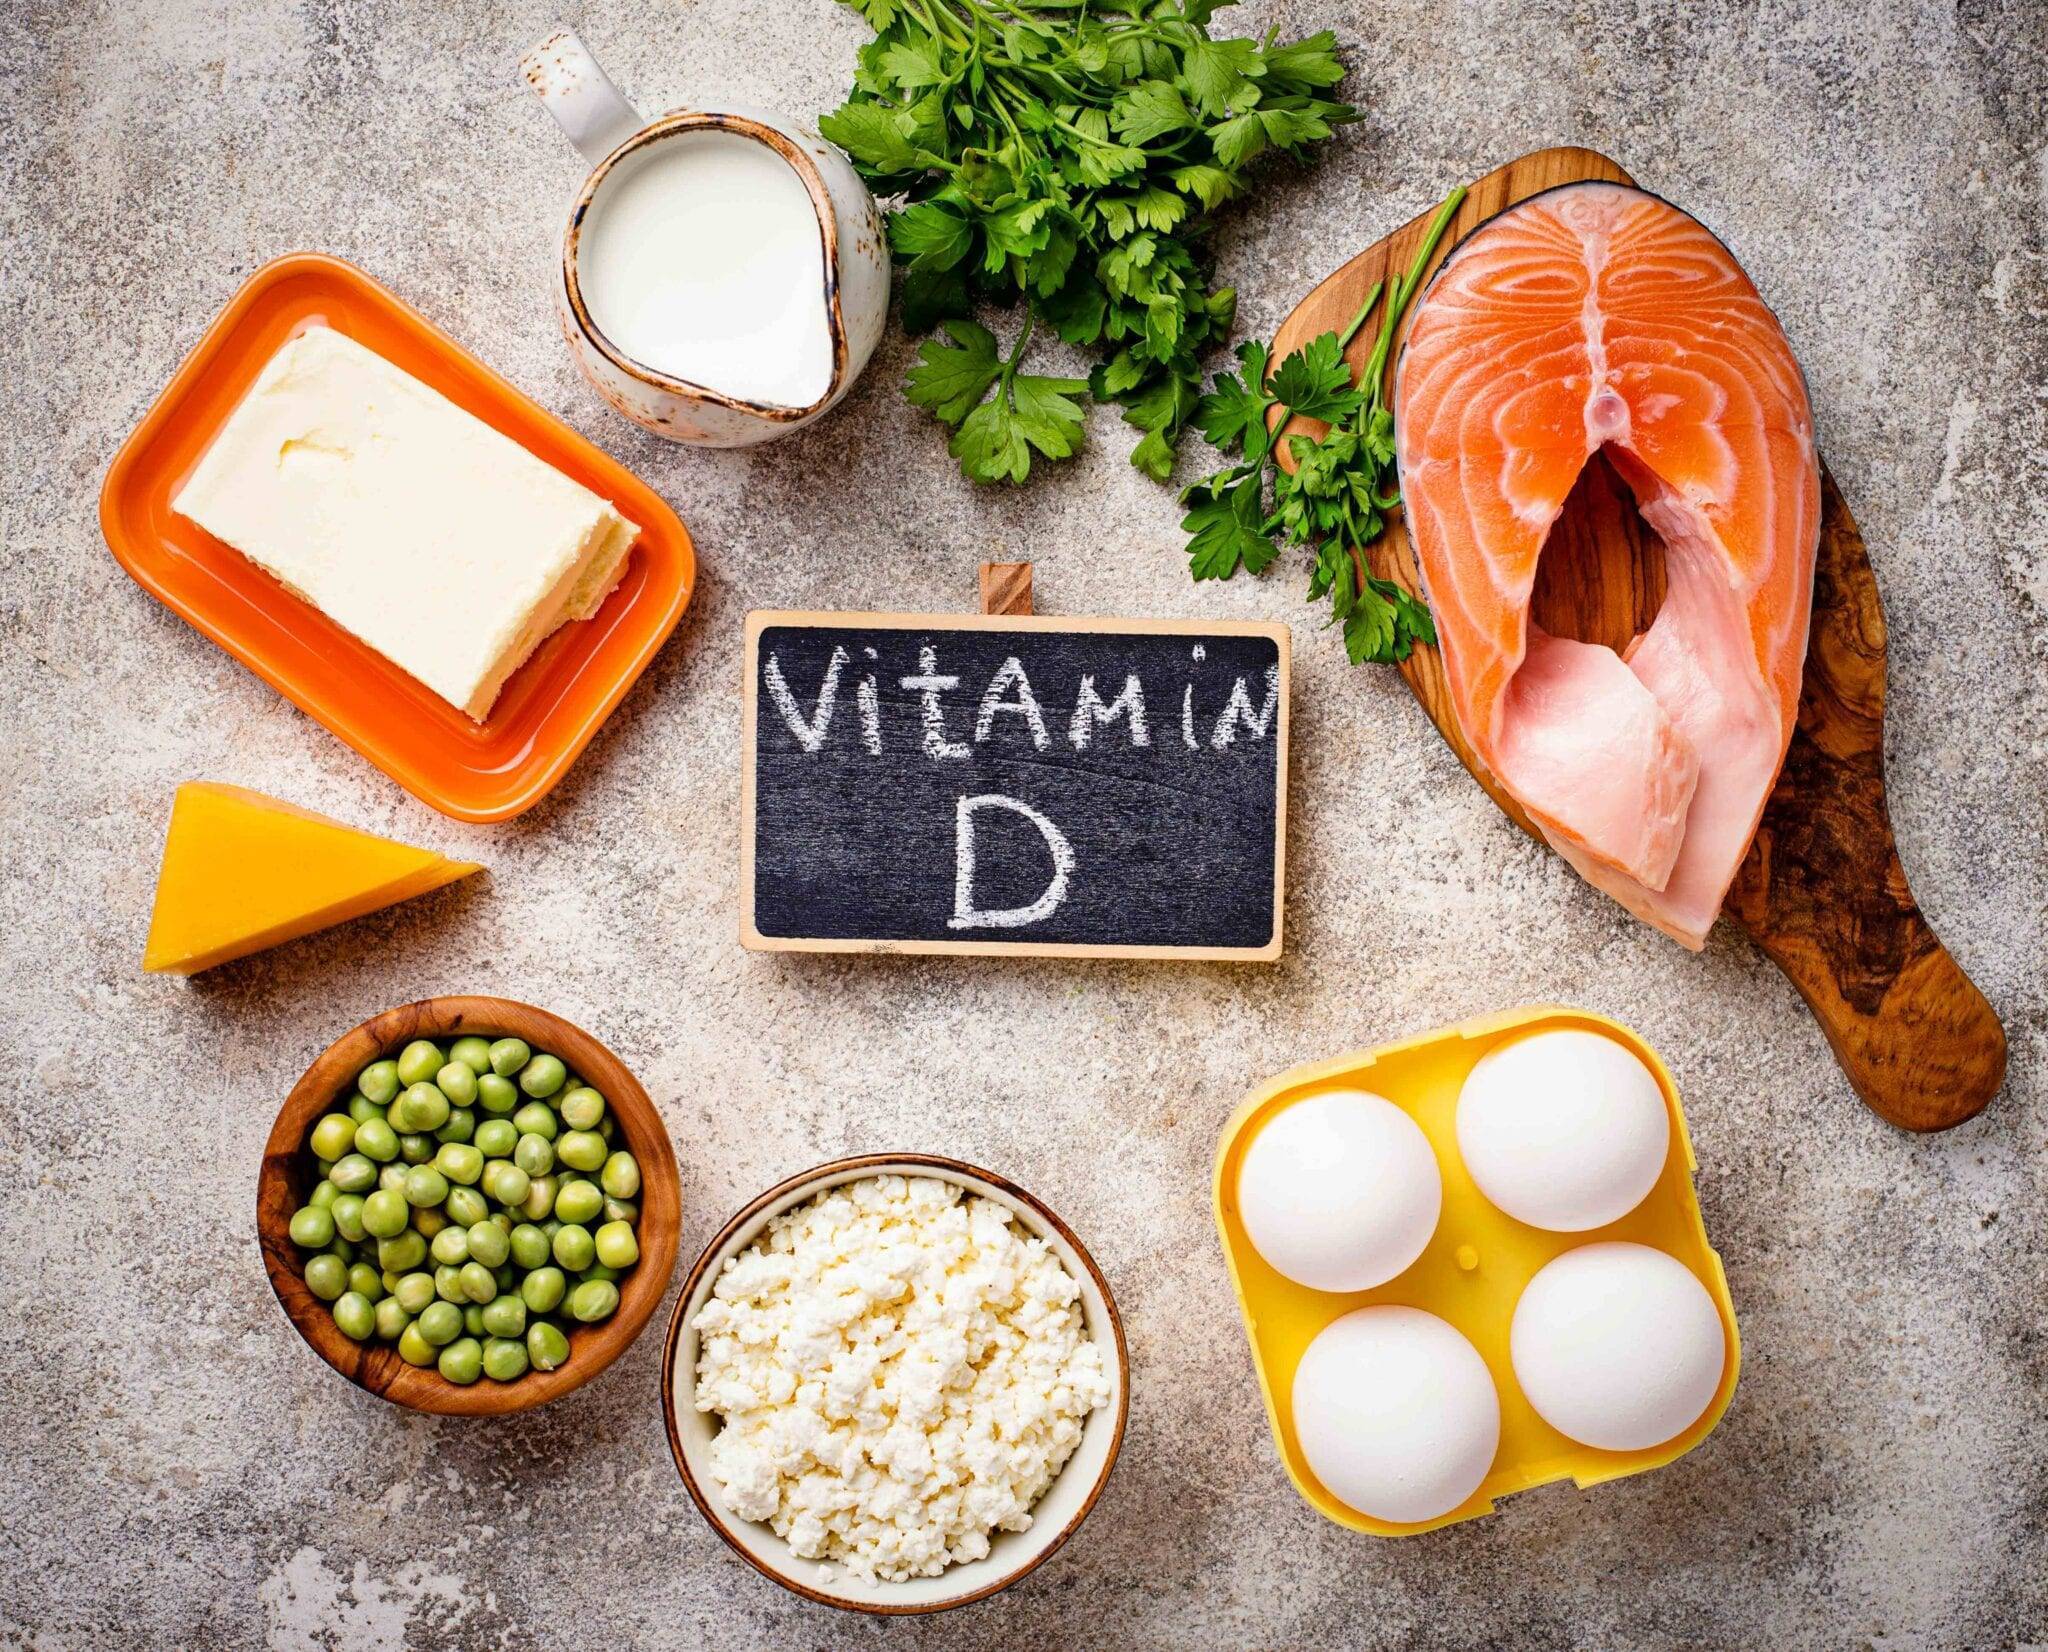 Витамин д и д3 одно тоже. Витамин д продукты содержащие витамин д. Витамин д3 продукты. Продукты содержащие витамин д3. Источники витамина д.